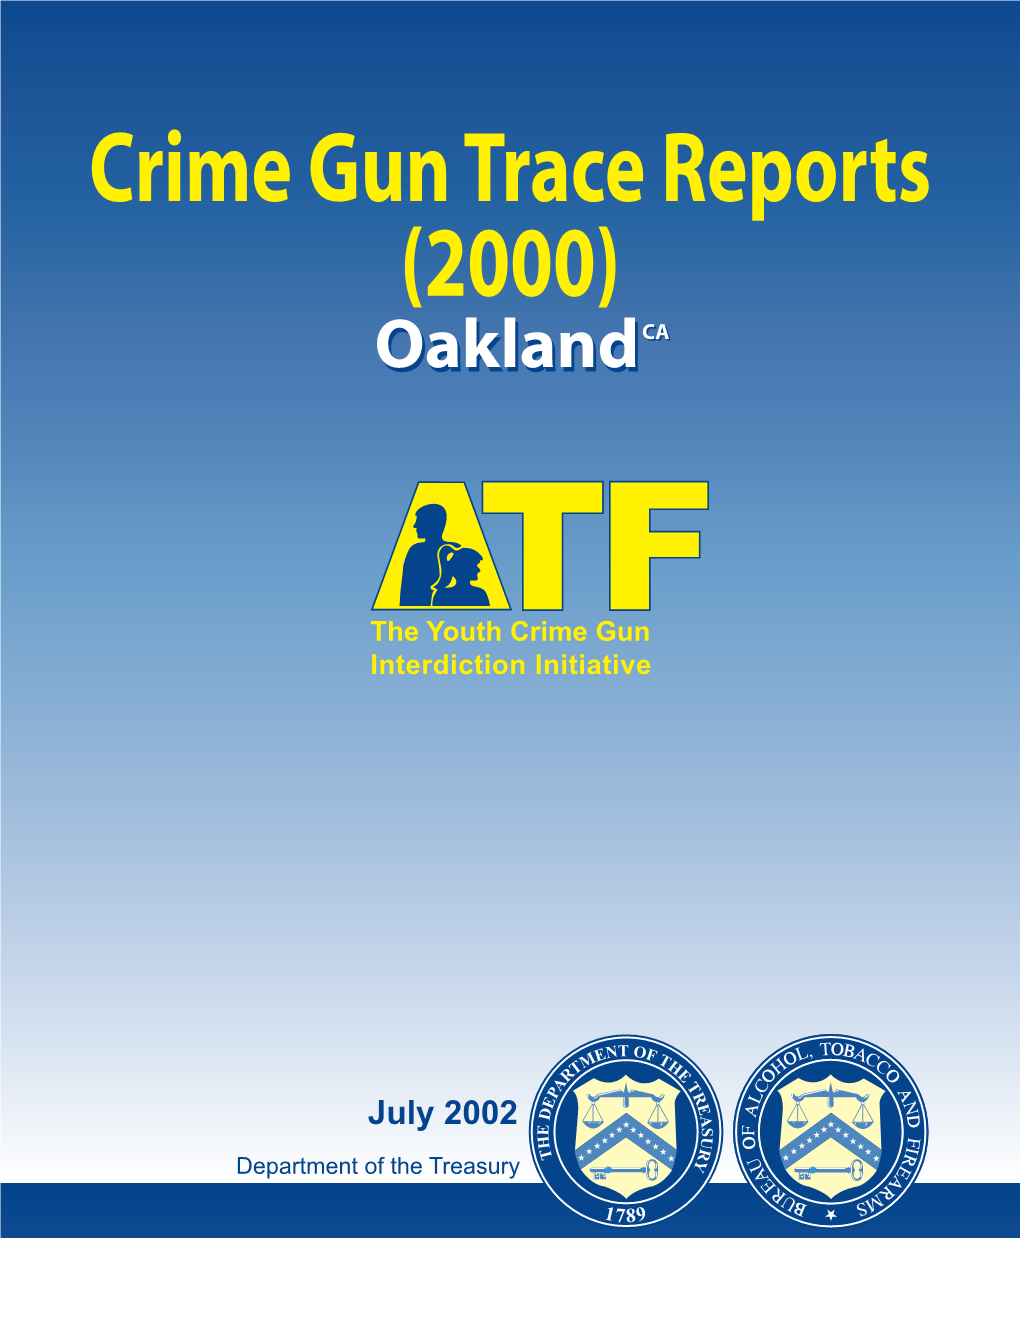 Crime Gun Trace Reports (2000) Ooaakkllaannddca